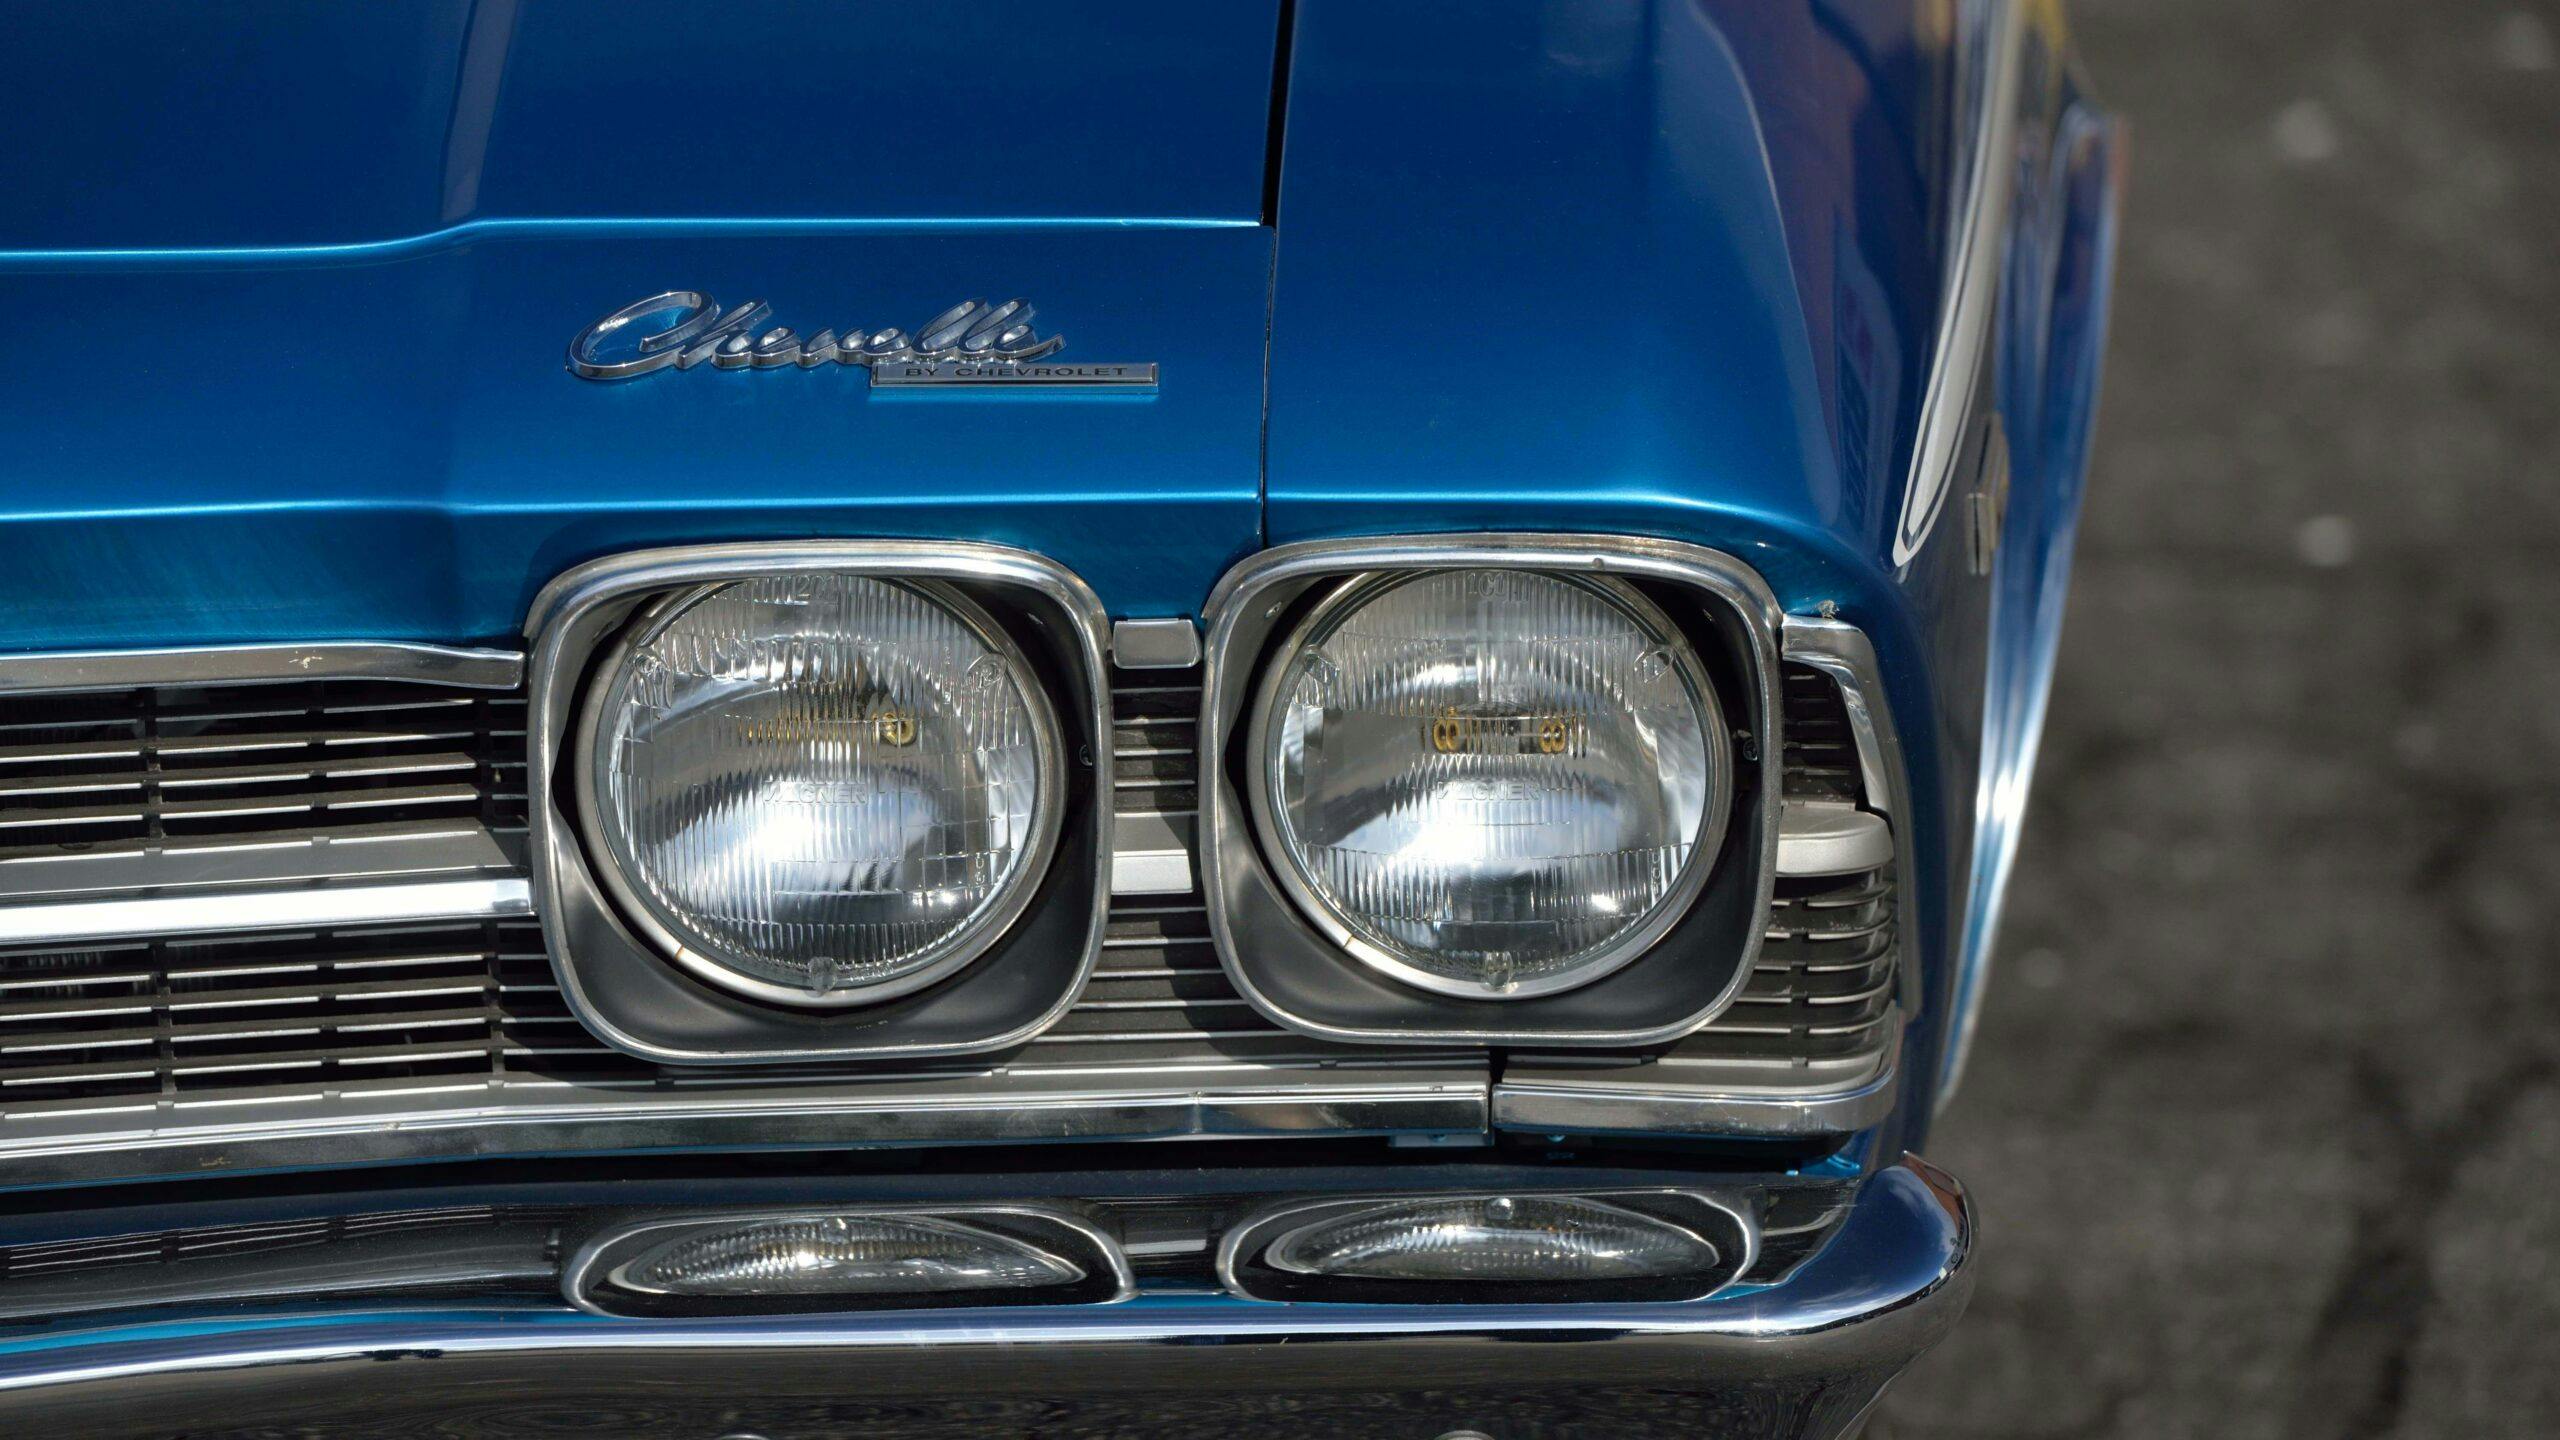 Bruce Springsteen 1969 Chevrolet Chevelle Convertible headlight